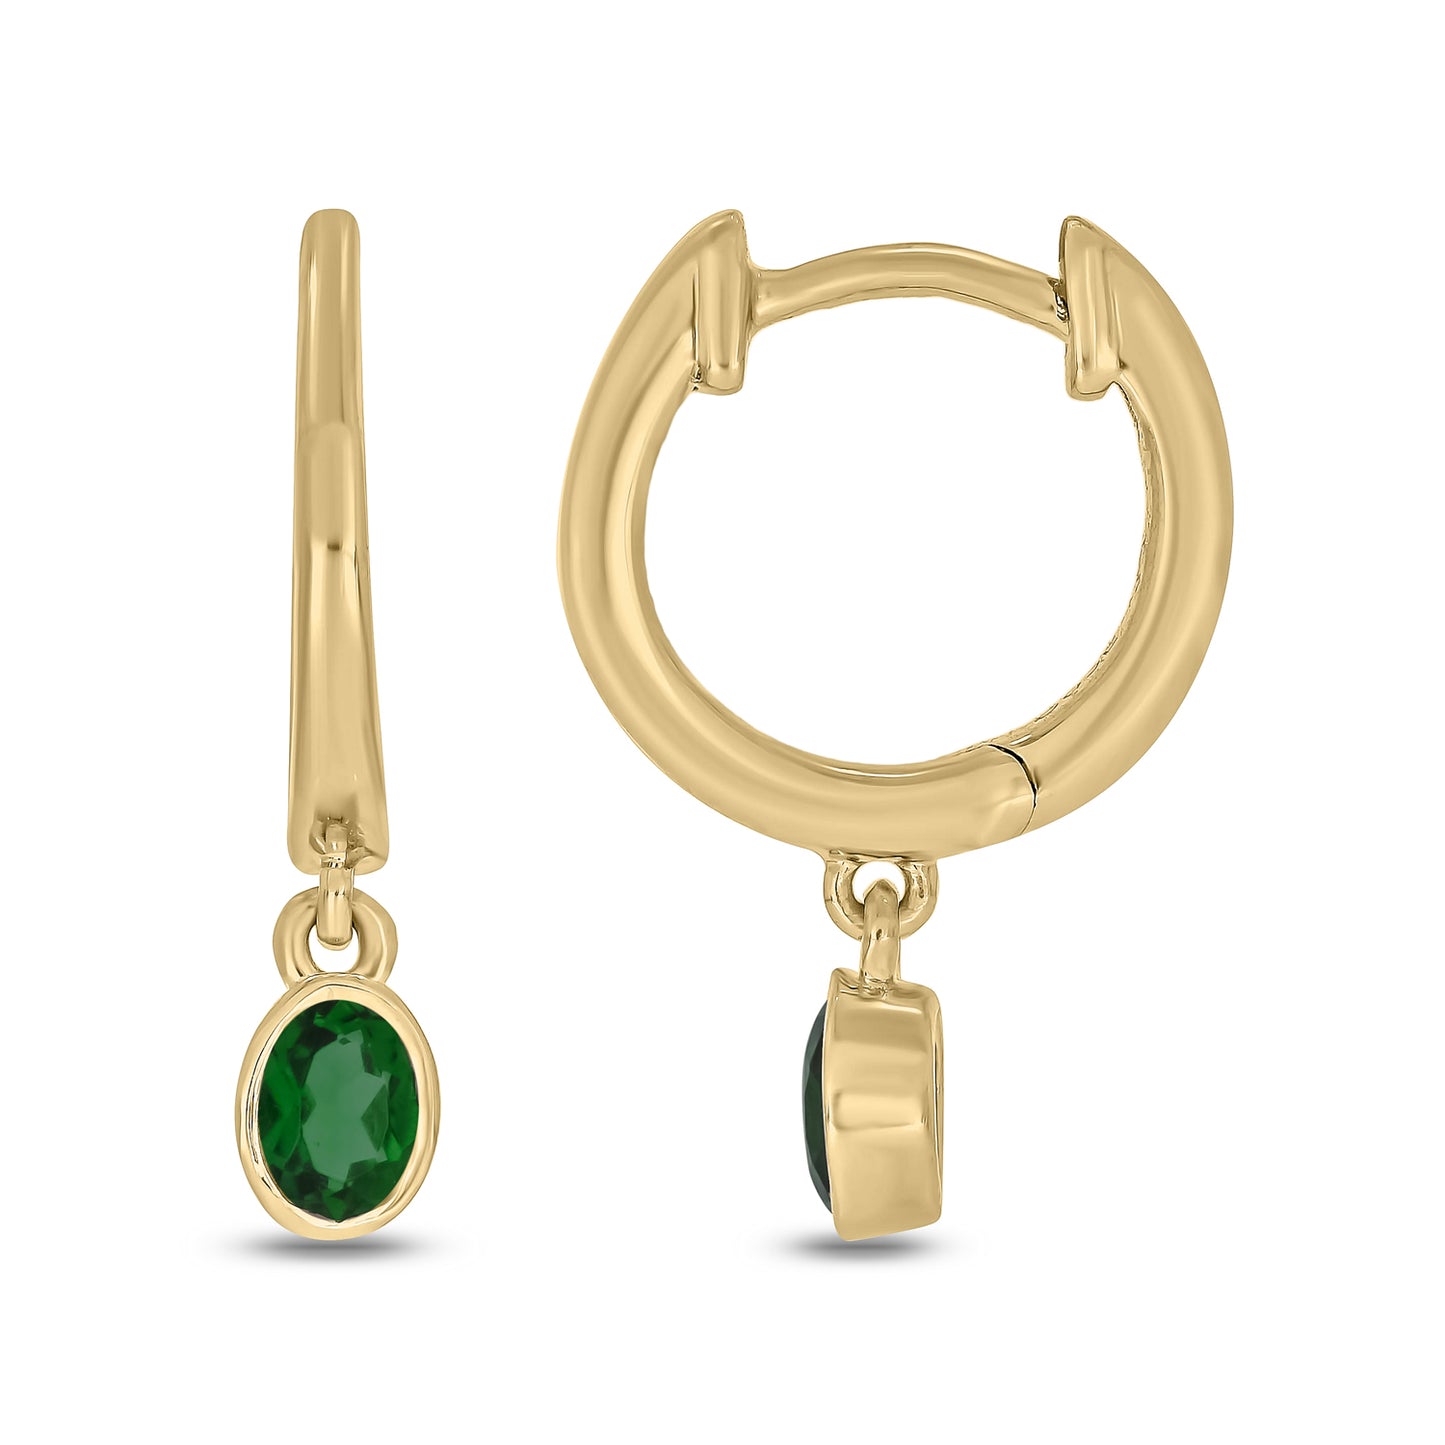 14KT Gold, Mini Dangling Gemstone Hoop Earrings, available in Silver